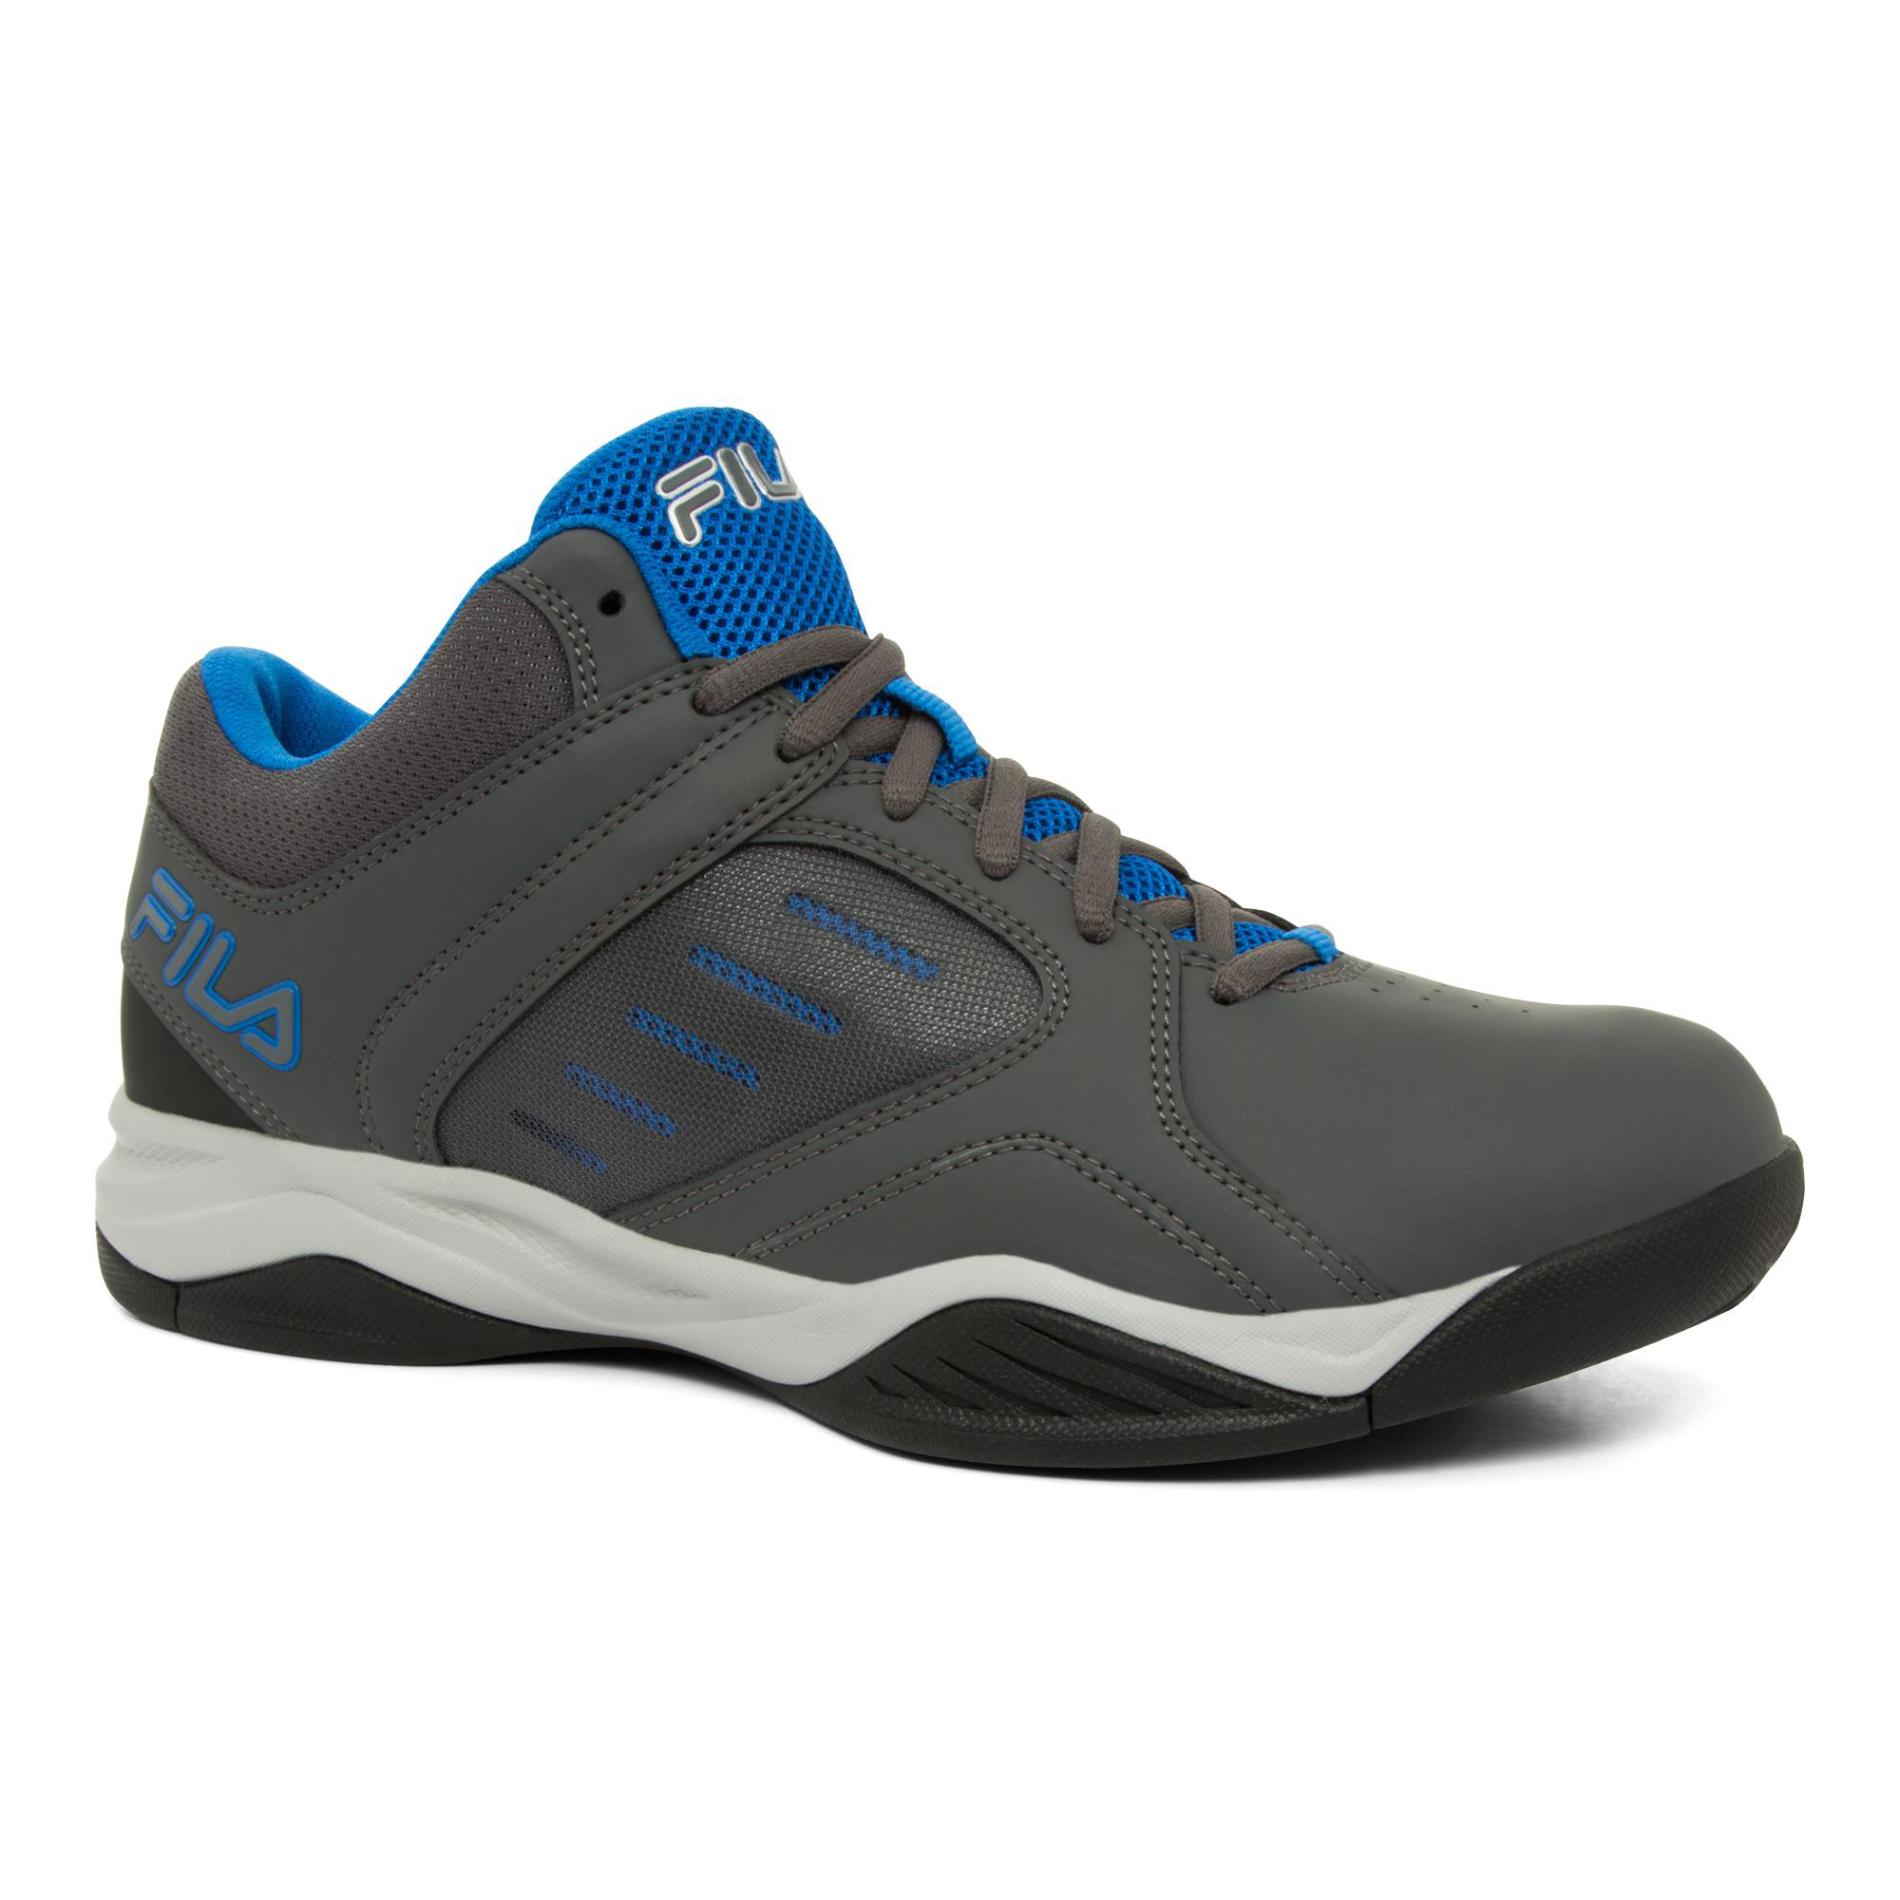 Fila Men's Bank Athletic Shoe - Gray/Blue